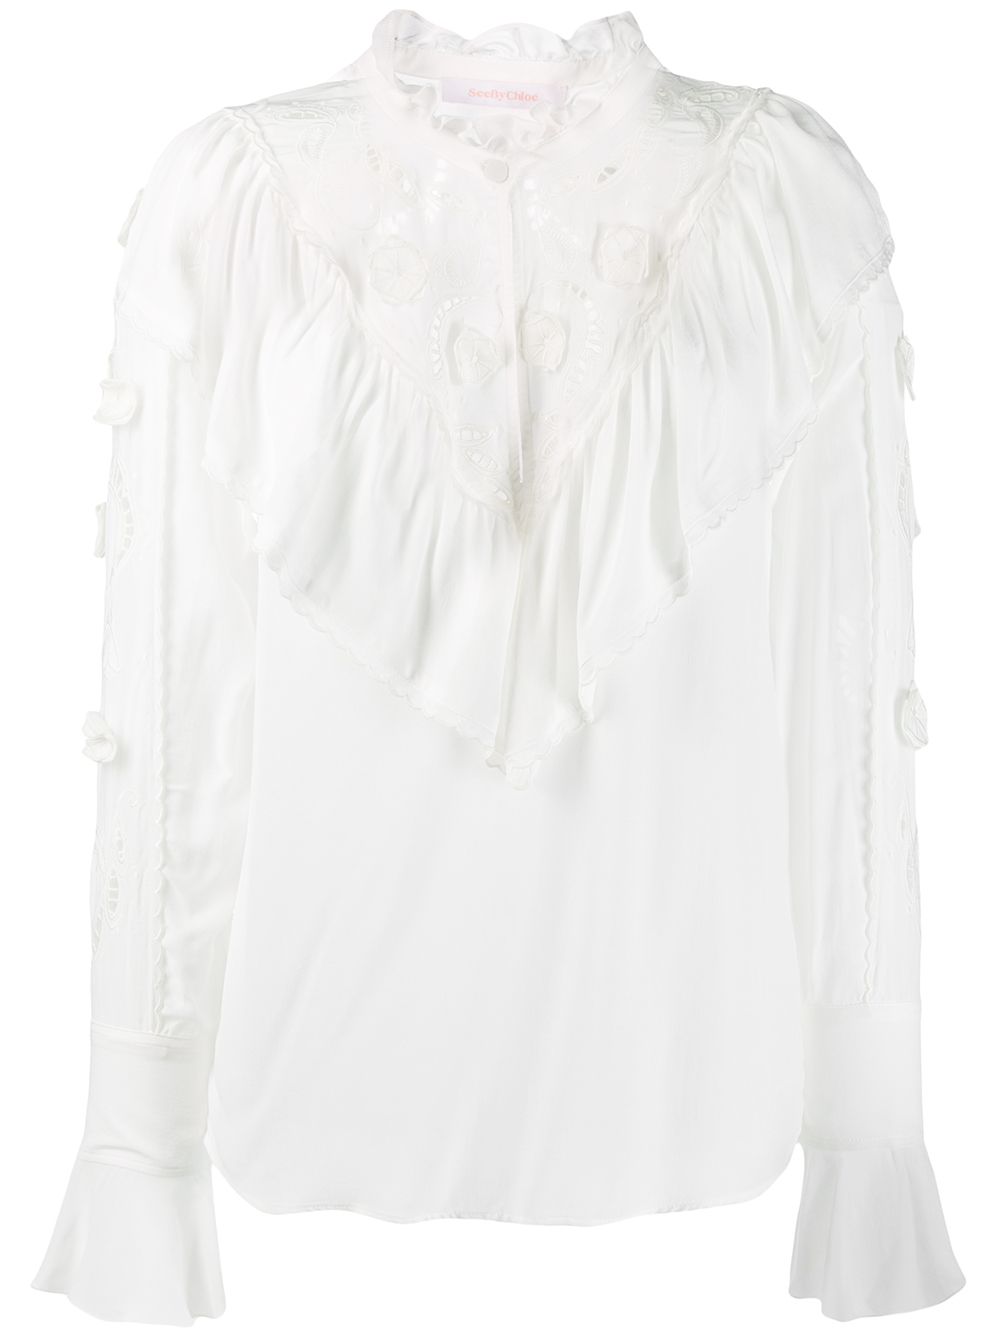 фото See by chloé блузка с воротником-стойкой и оборками